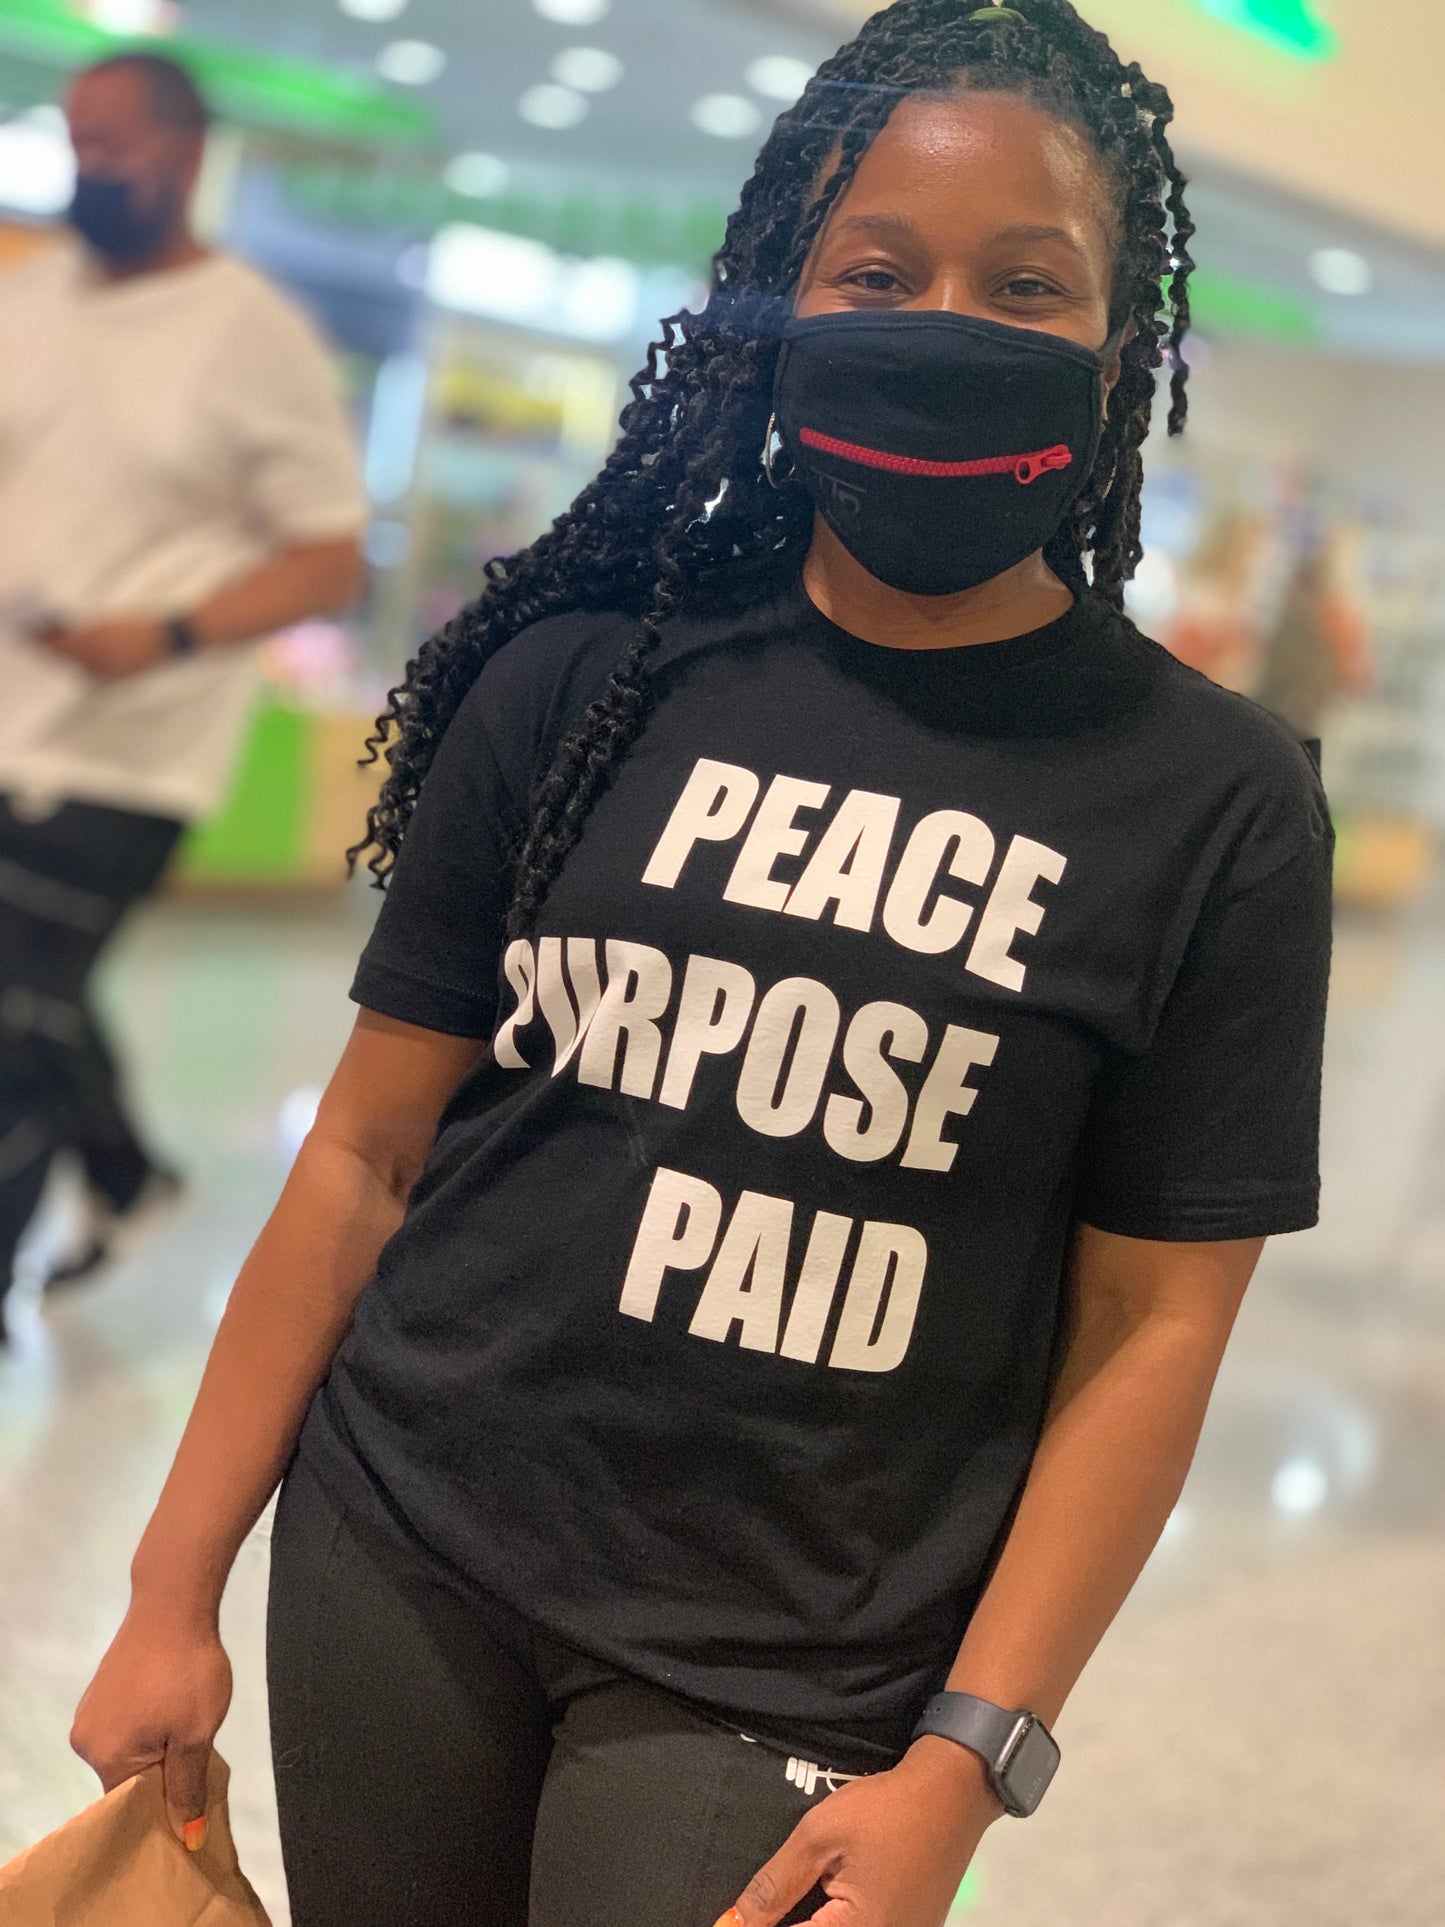 Peace Purpose Paid Short Sleeve